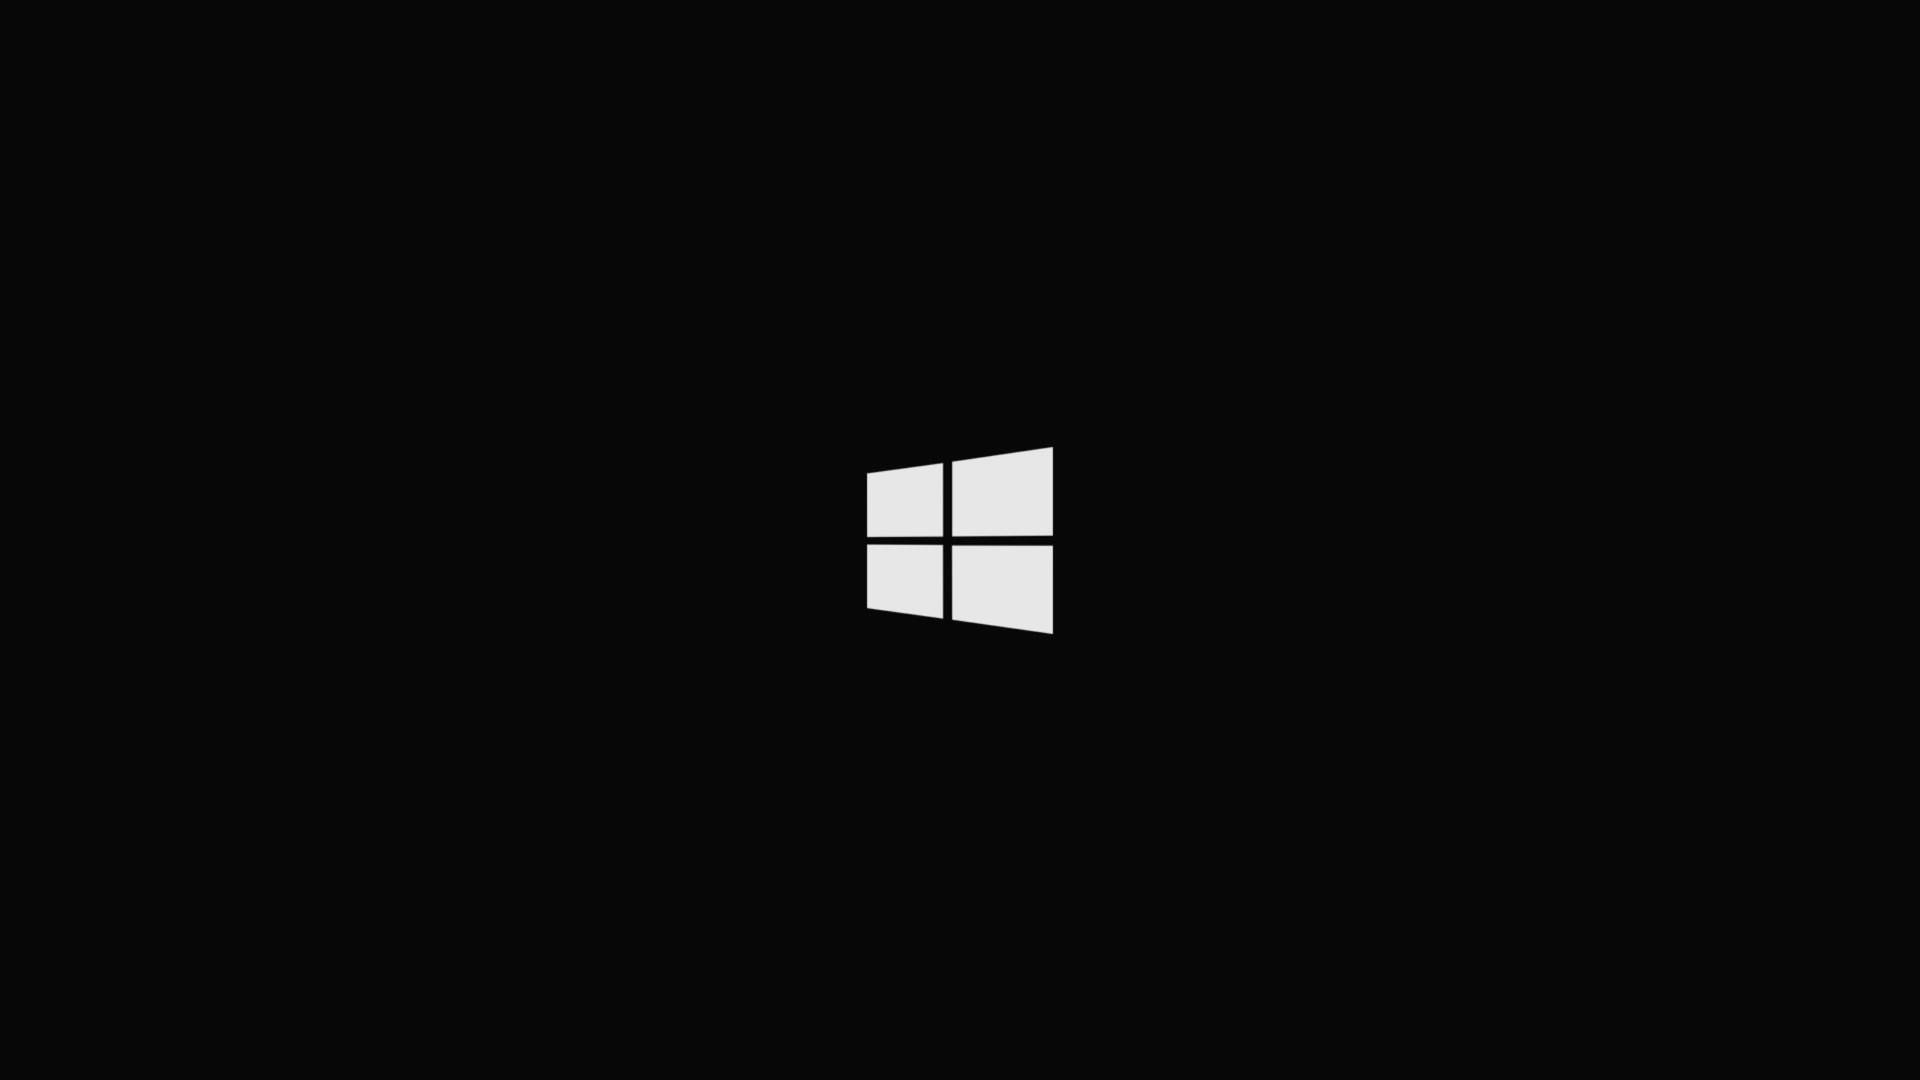 Hvid Windows-logo På Blank Sort